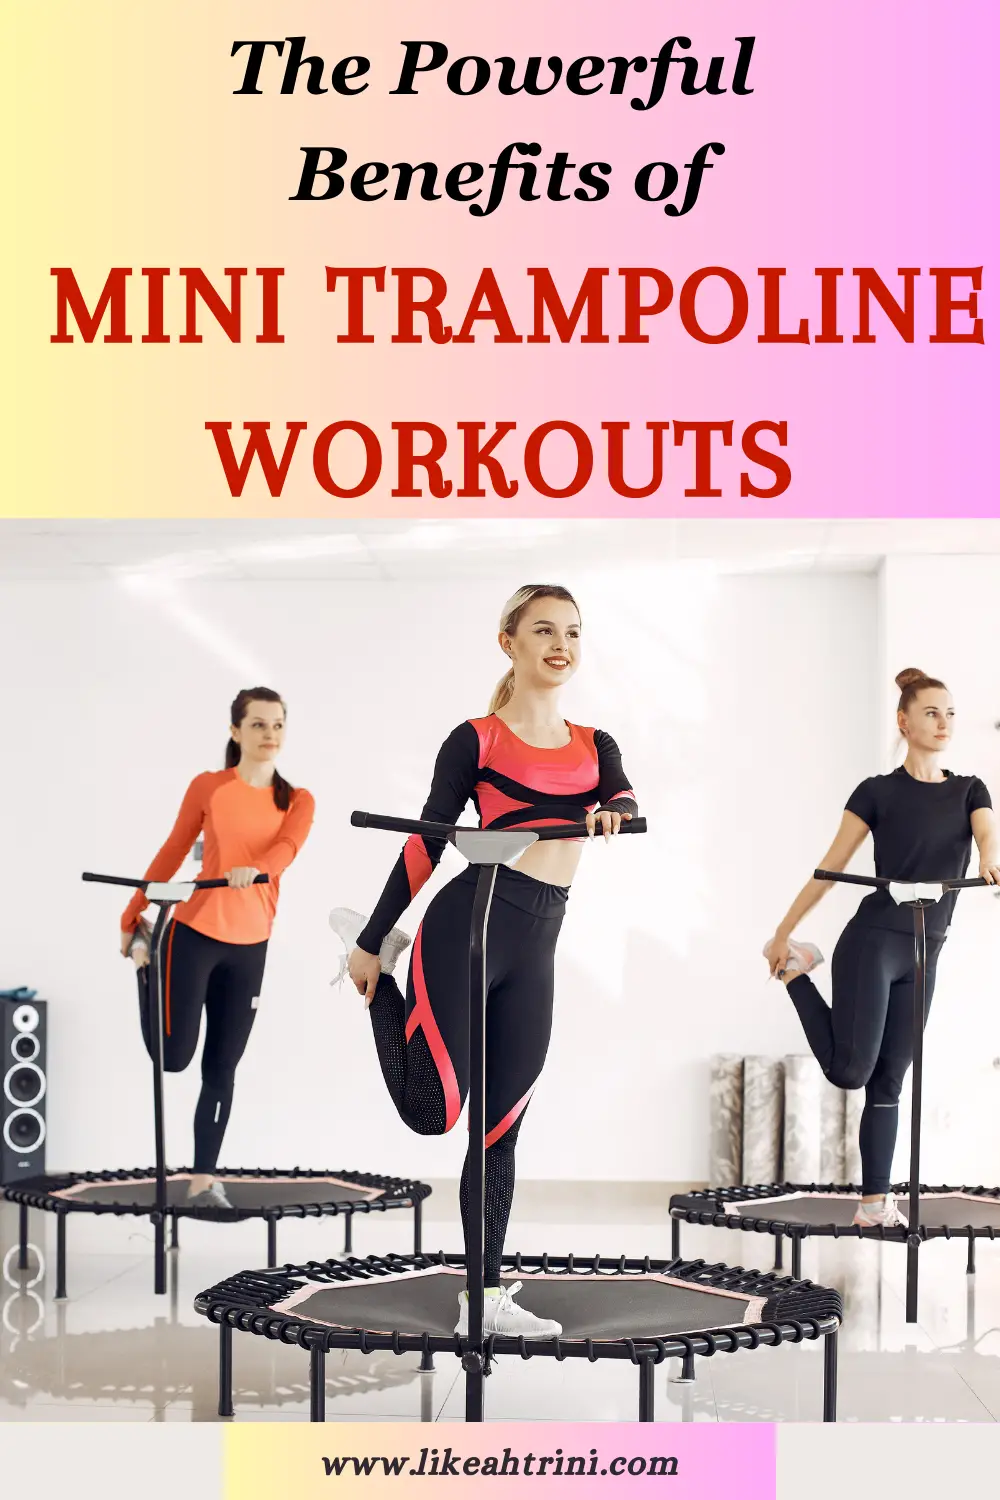 REBOUNDER EXERCISE VIDEOS  Trampoline workout, Rebounder workouts